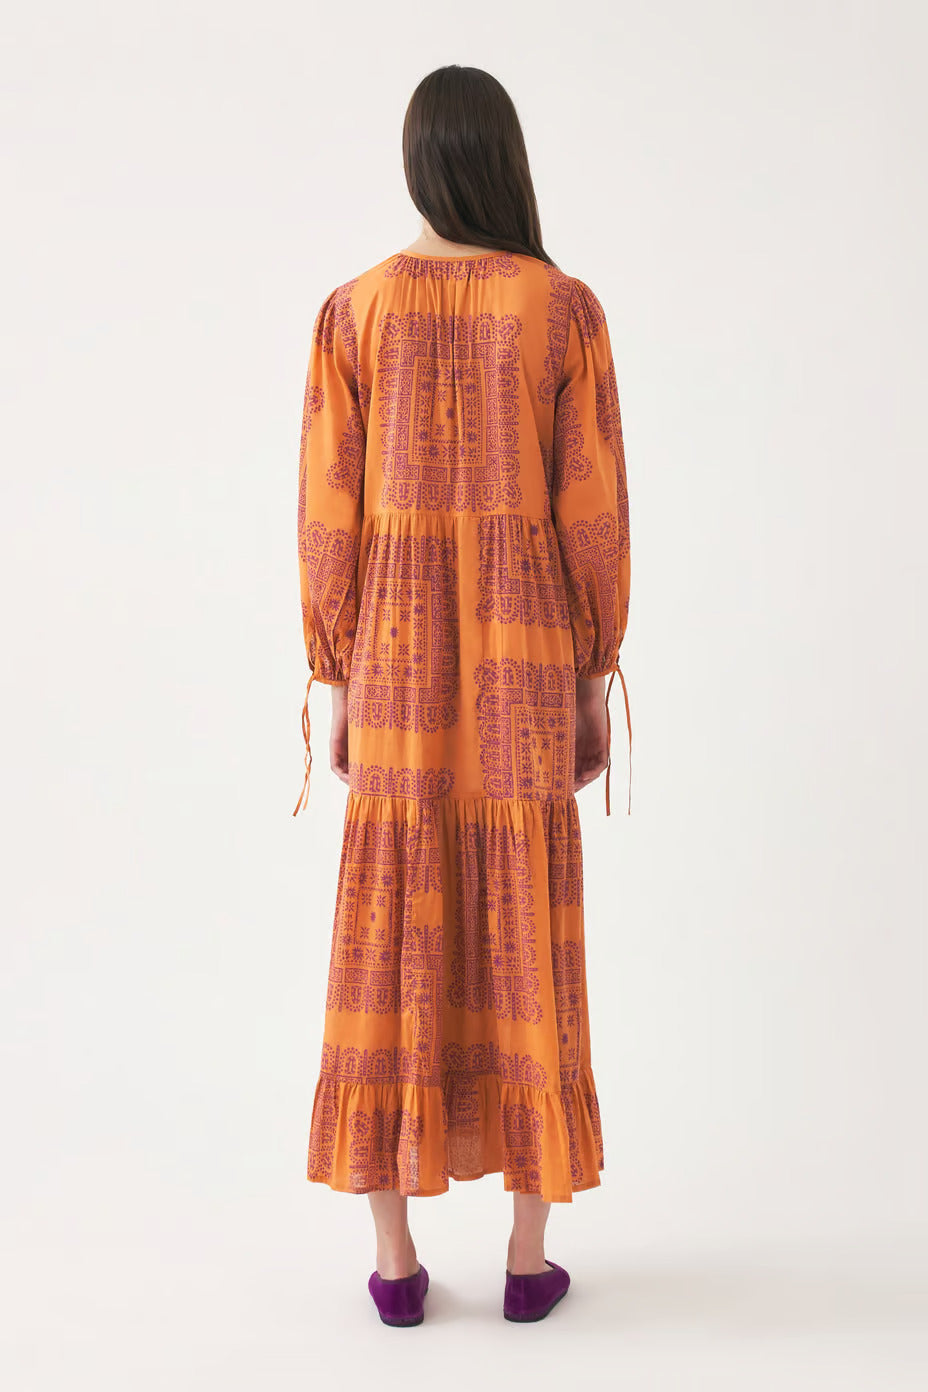 ANTIK BATIK_Savoir Faire_Heritage Handcrafted Textiles_Nali Maxi Boho Printed Dress - Deep Ochre with Maroon Aster Bandana Print Motif